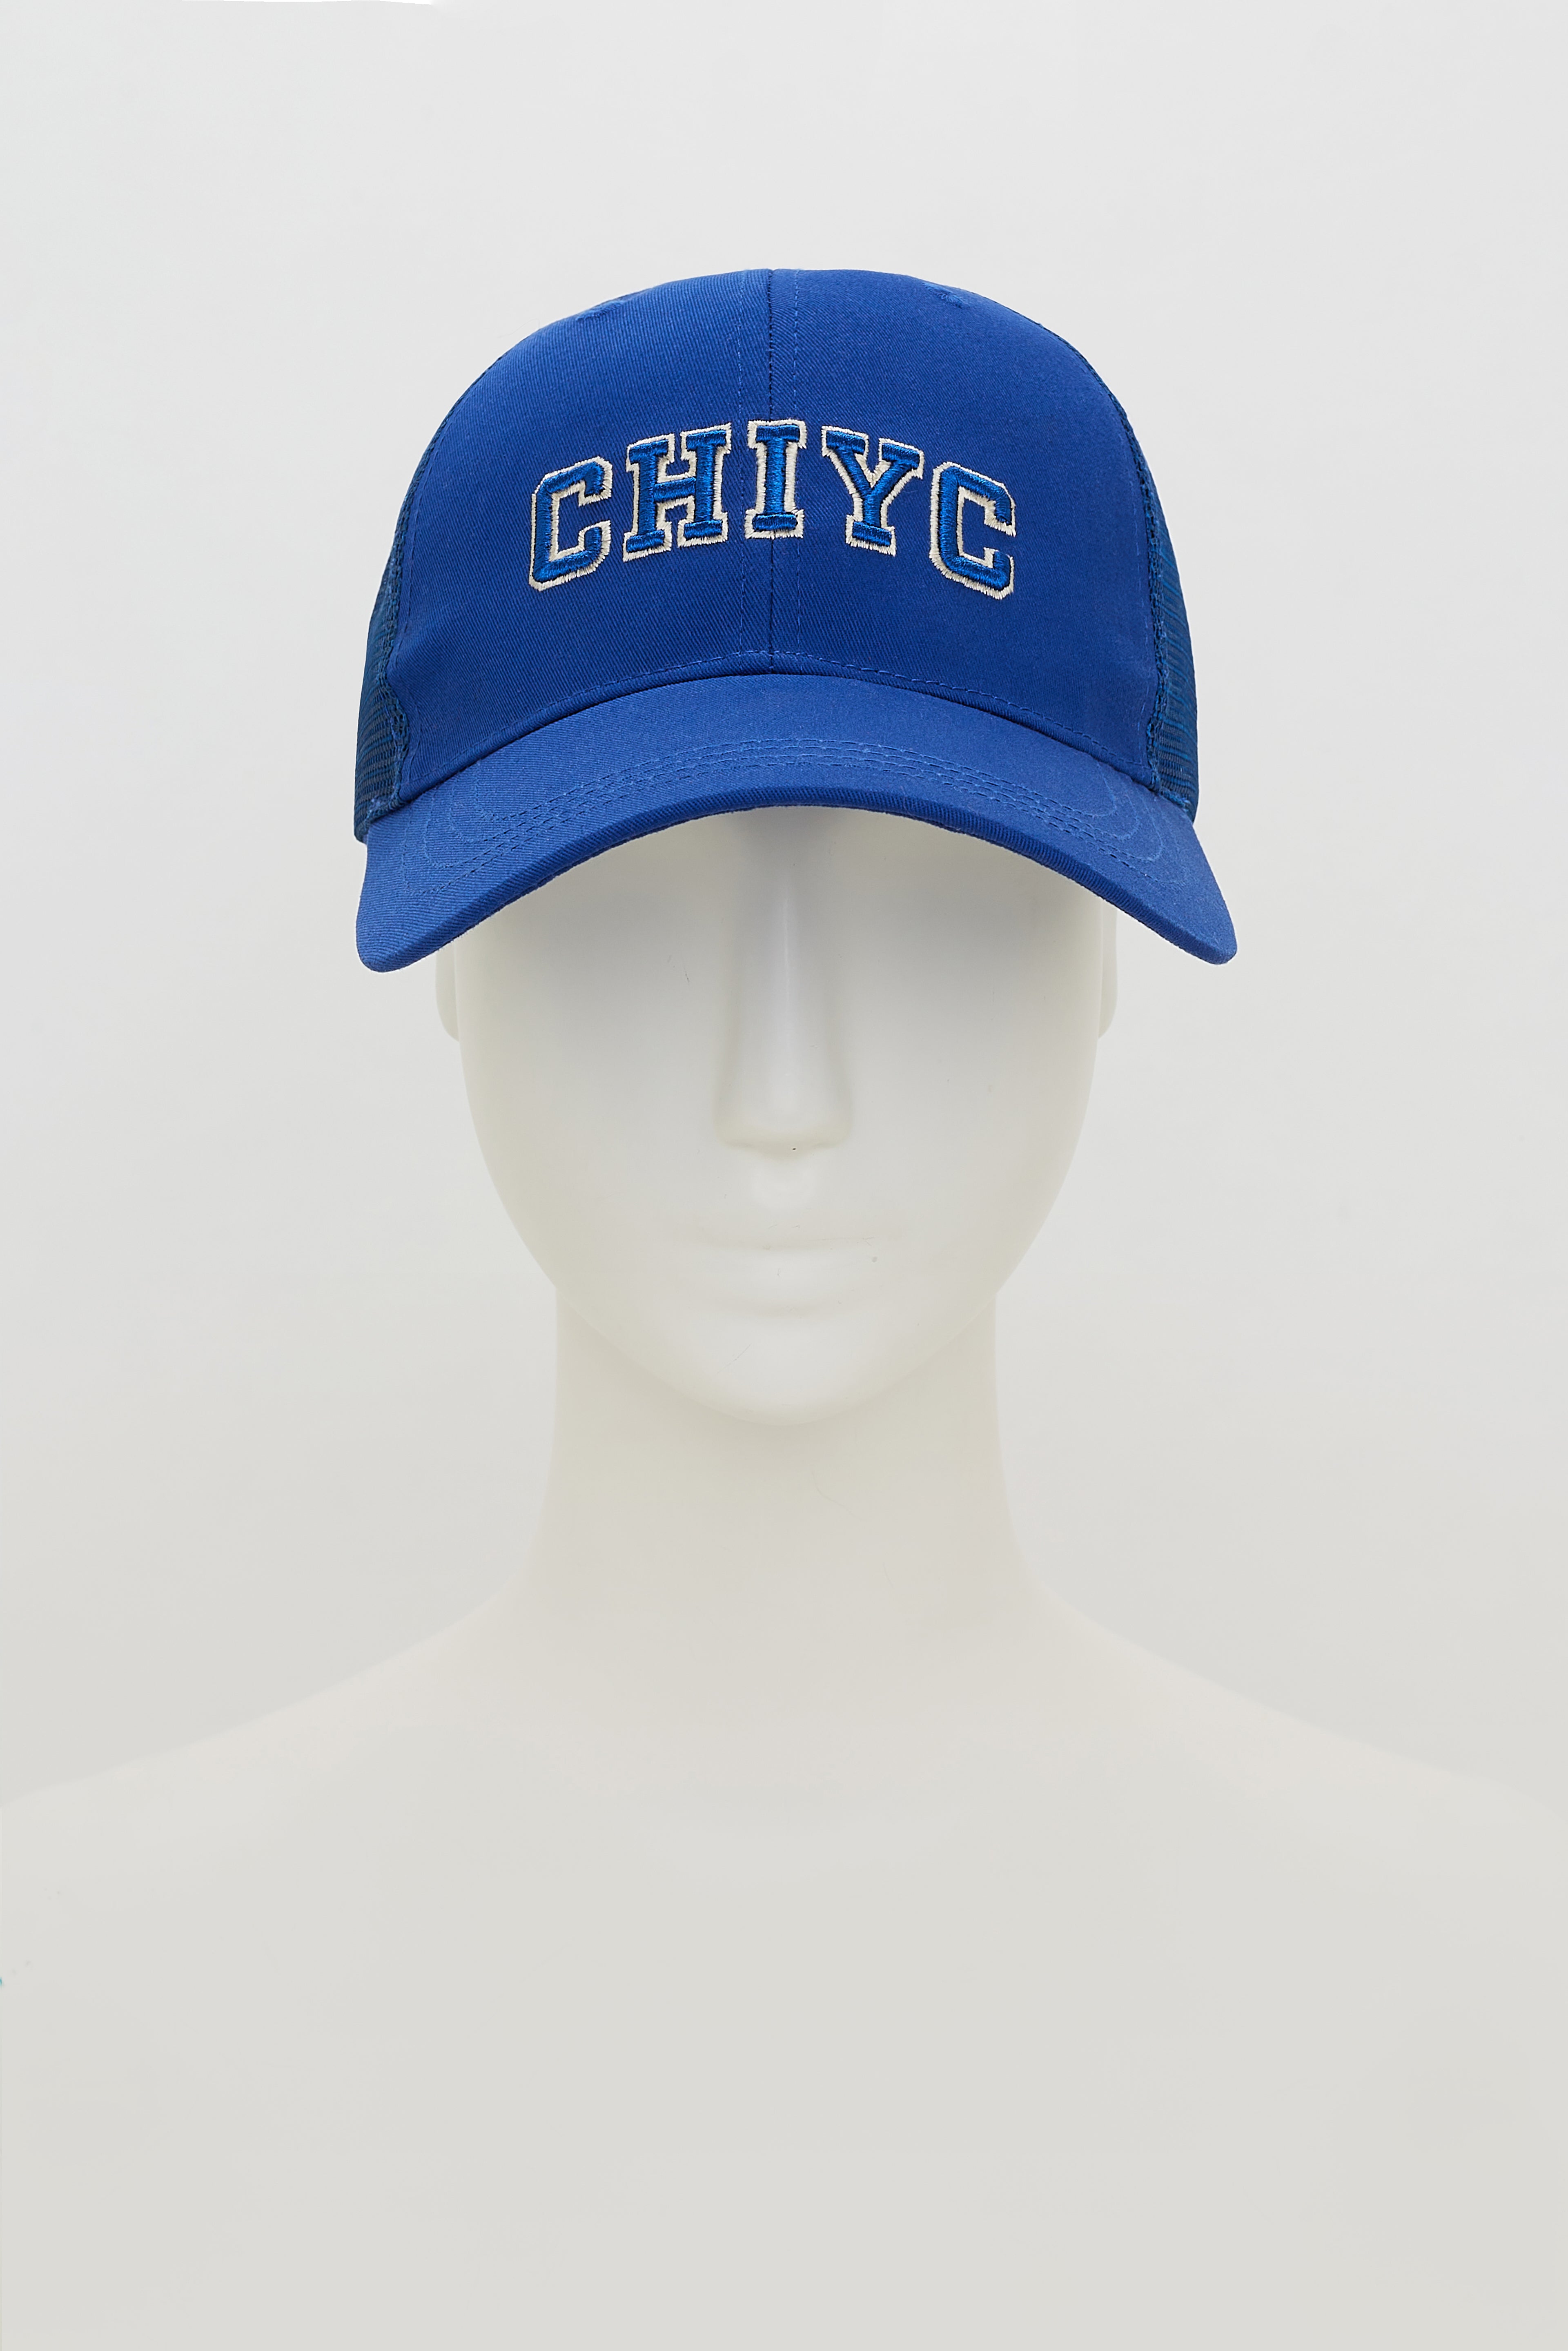 Dorothee-Schumacher-OUTLET-SALE-CHIYC-baseball-cap-Accessoires-OS-royal-blue.jpg